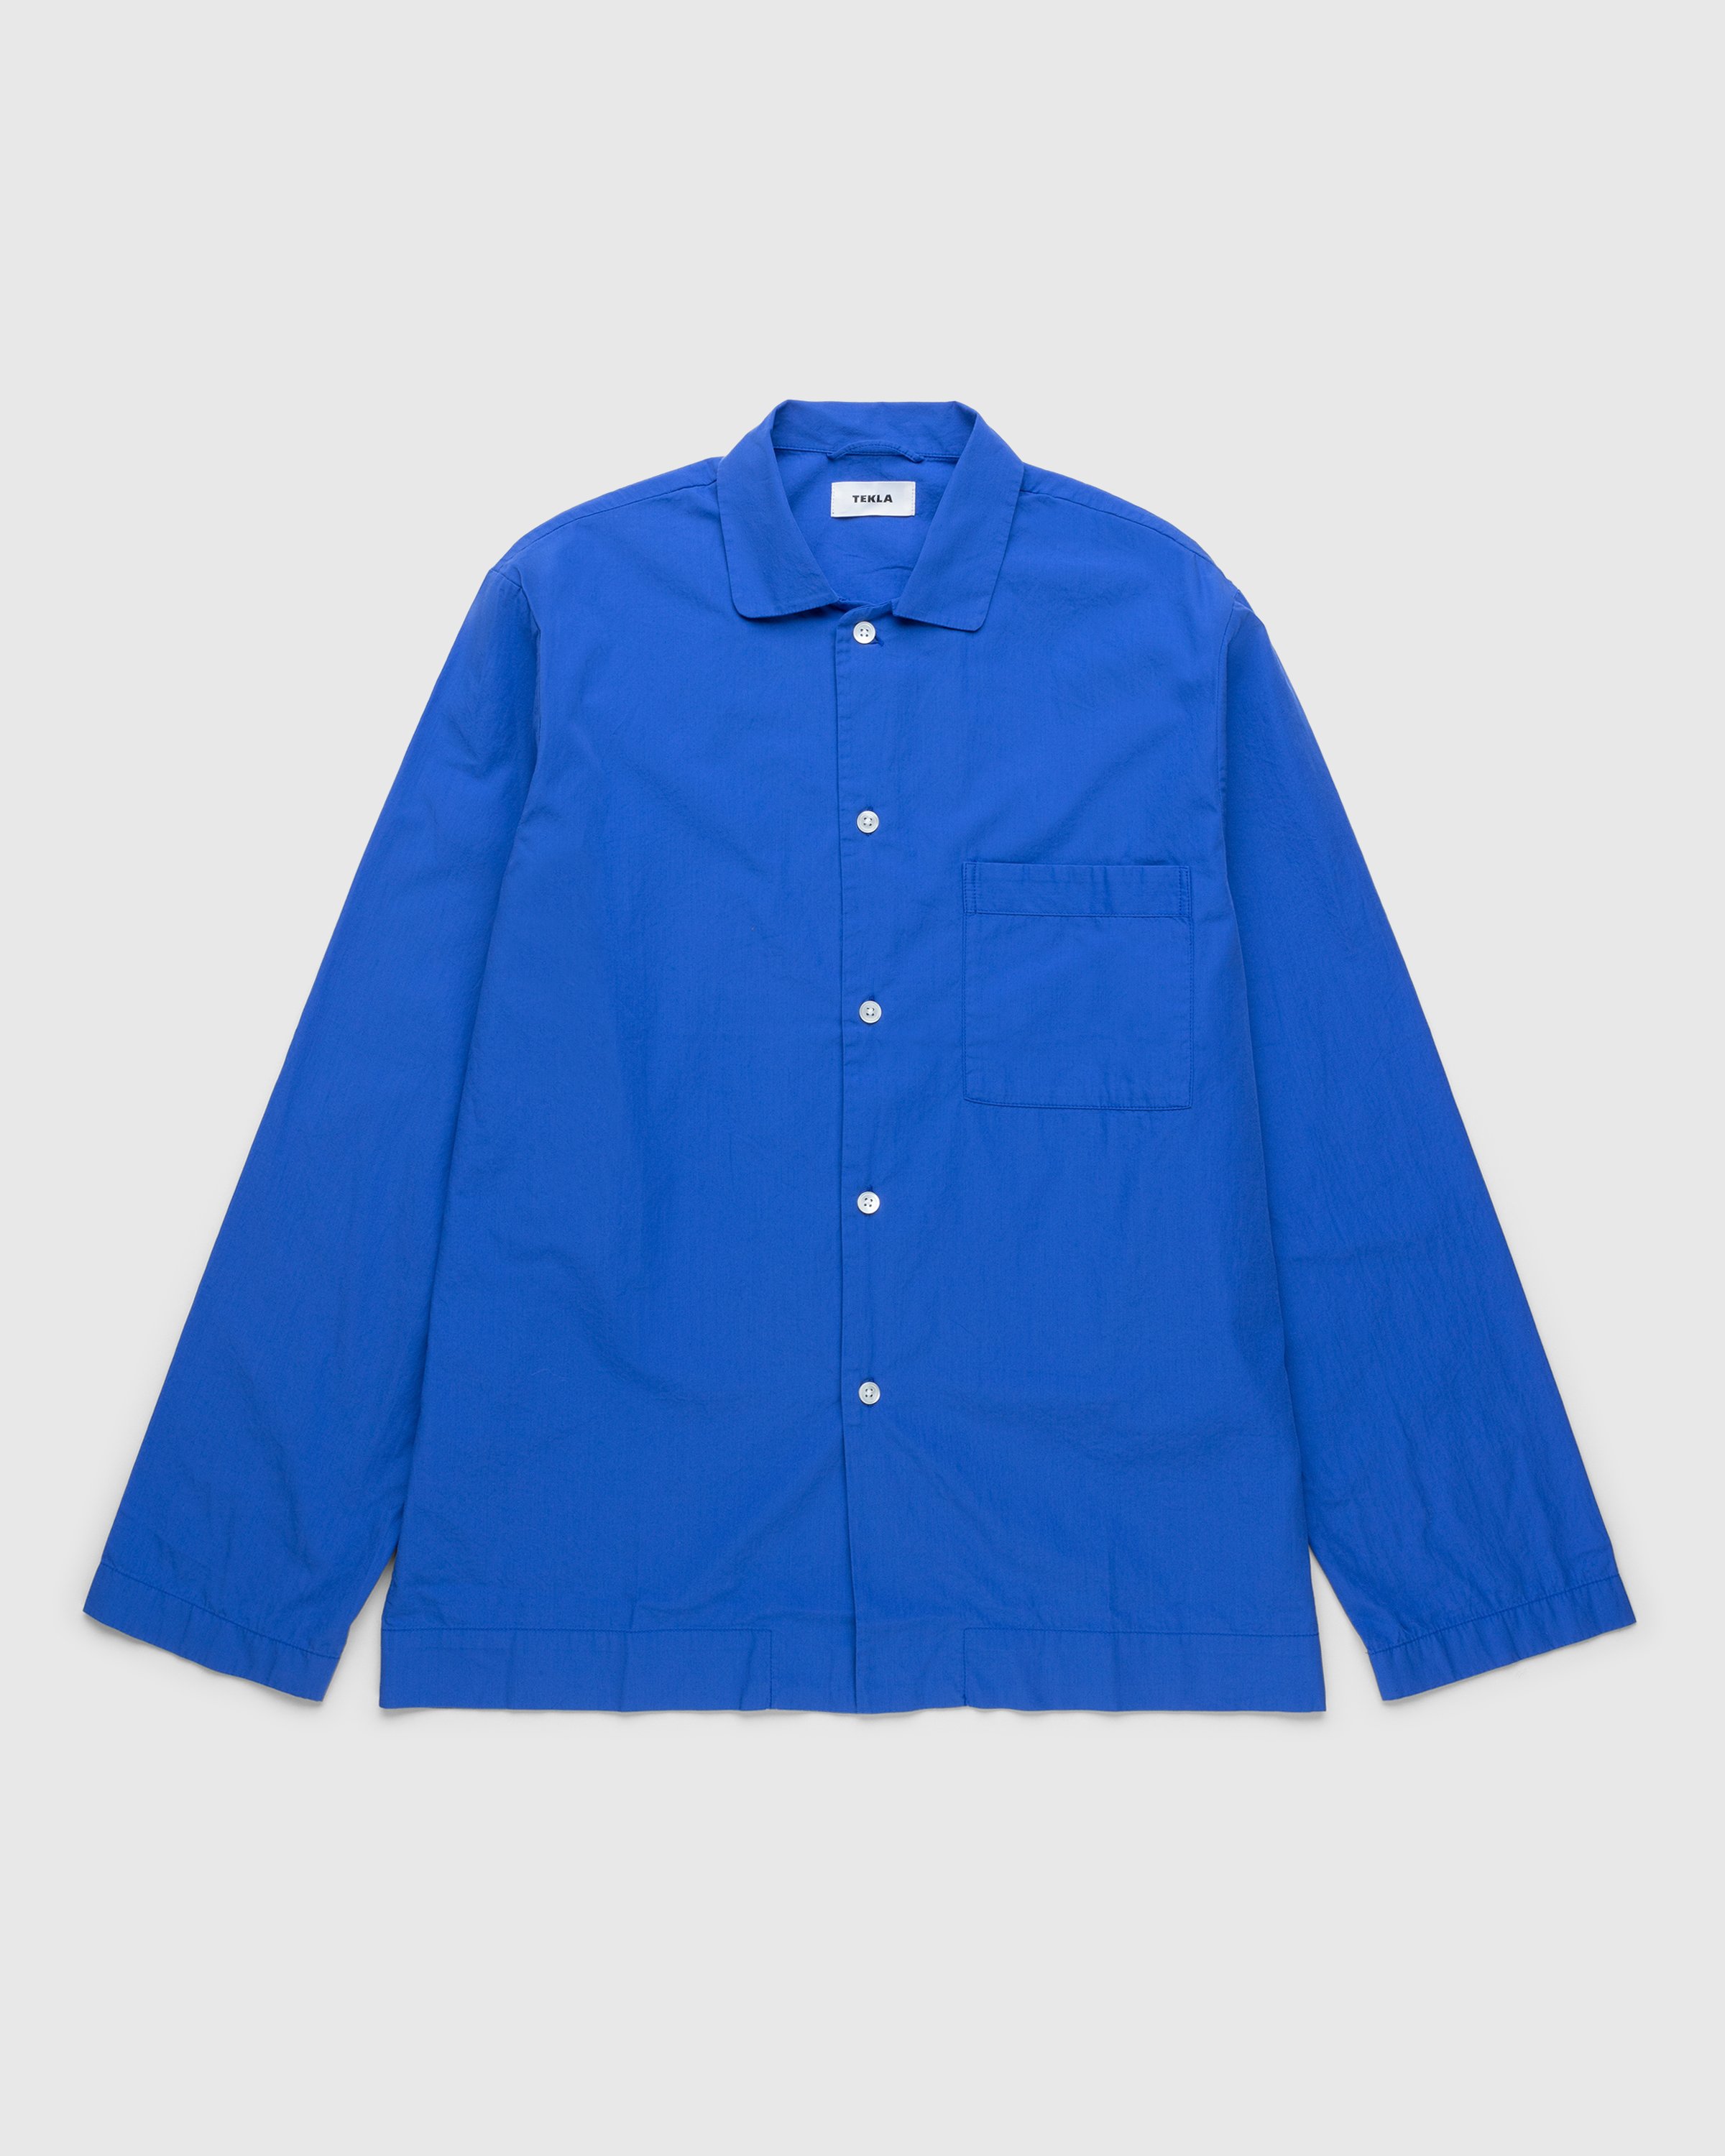 Tekla – Cotton Poplin Pyjamas Shirt Royal Blue | Highsnobiety Shop